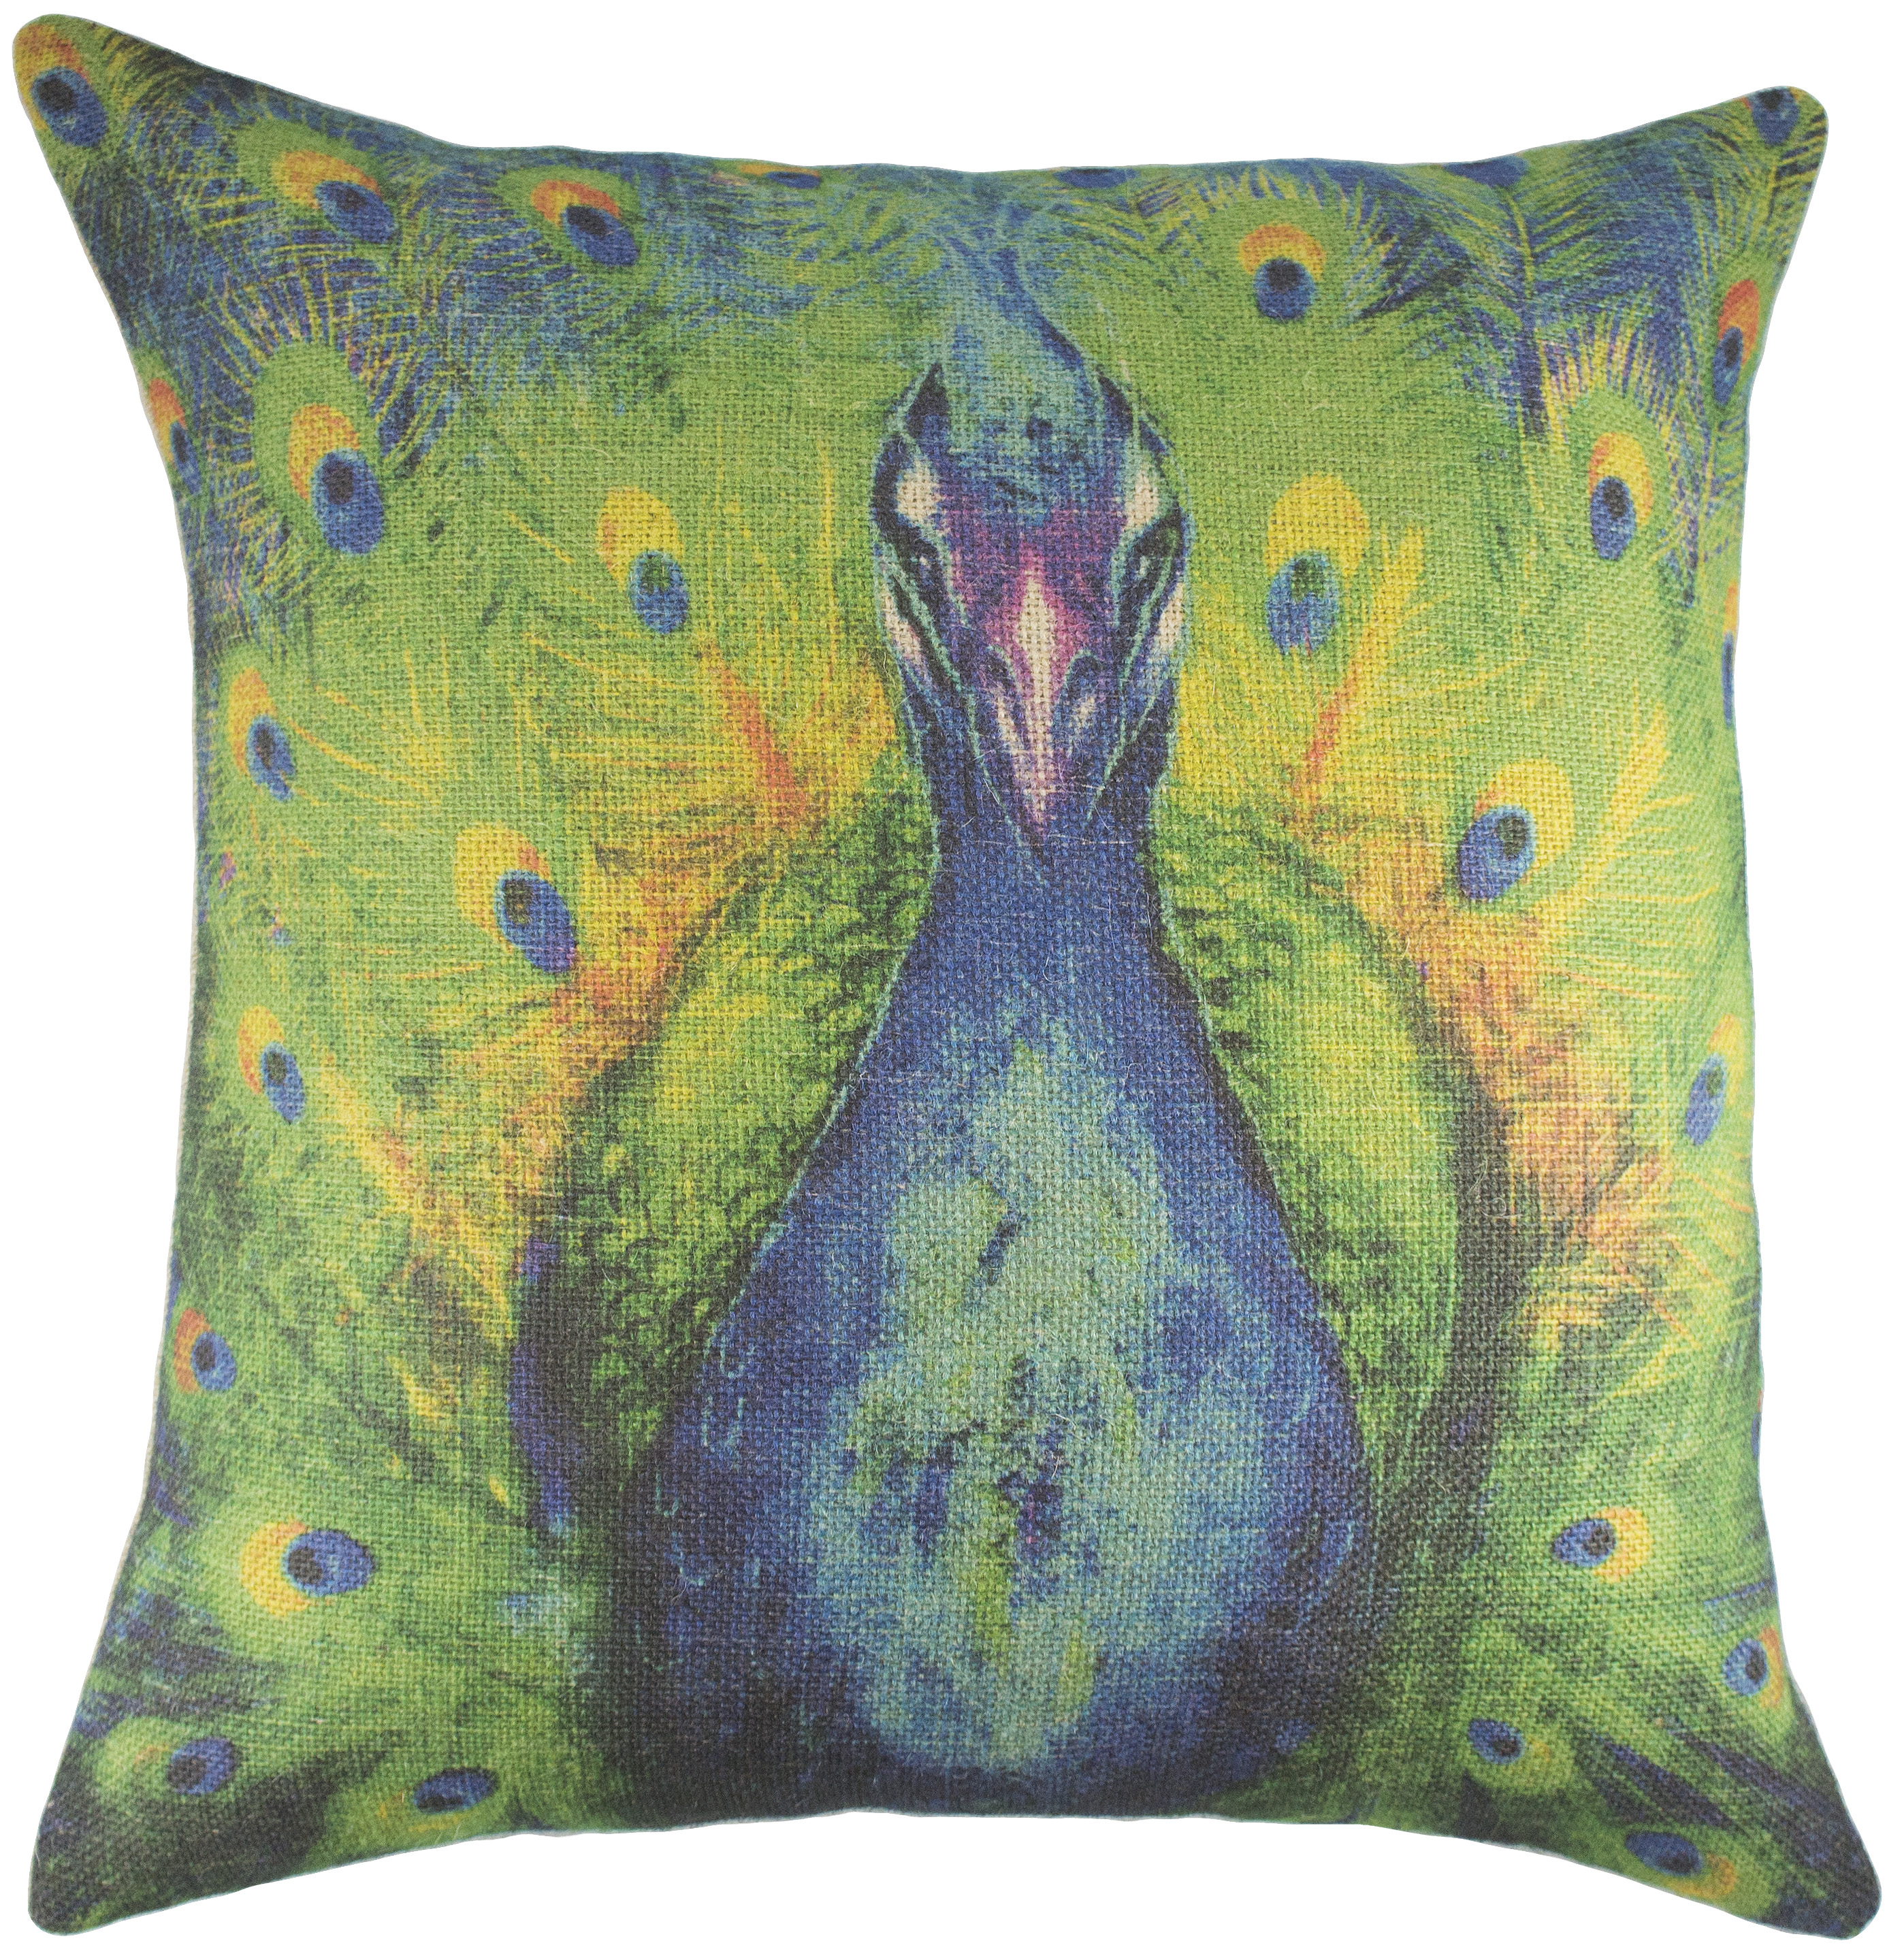 Peacock Burlap Pillow Cover (18" x 18")